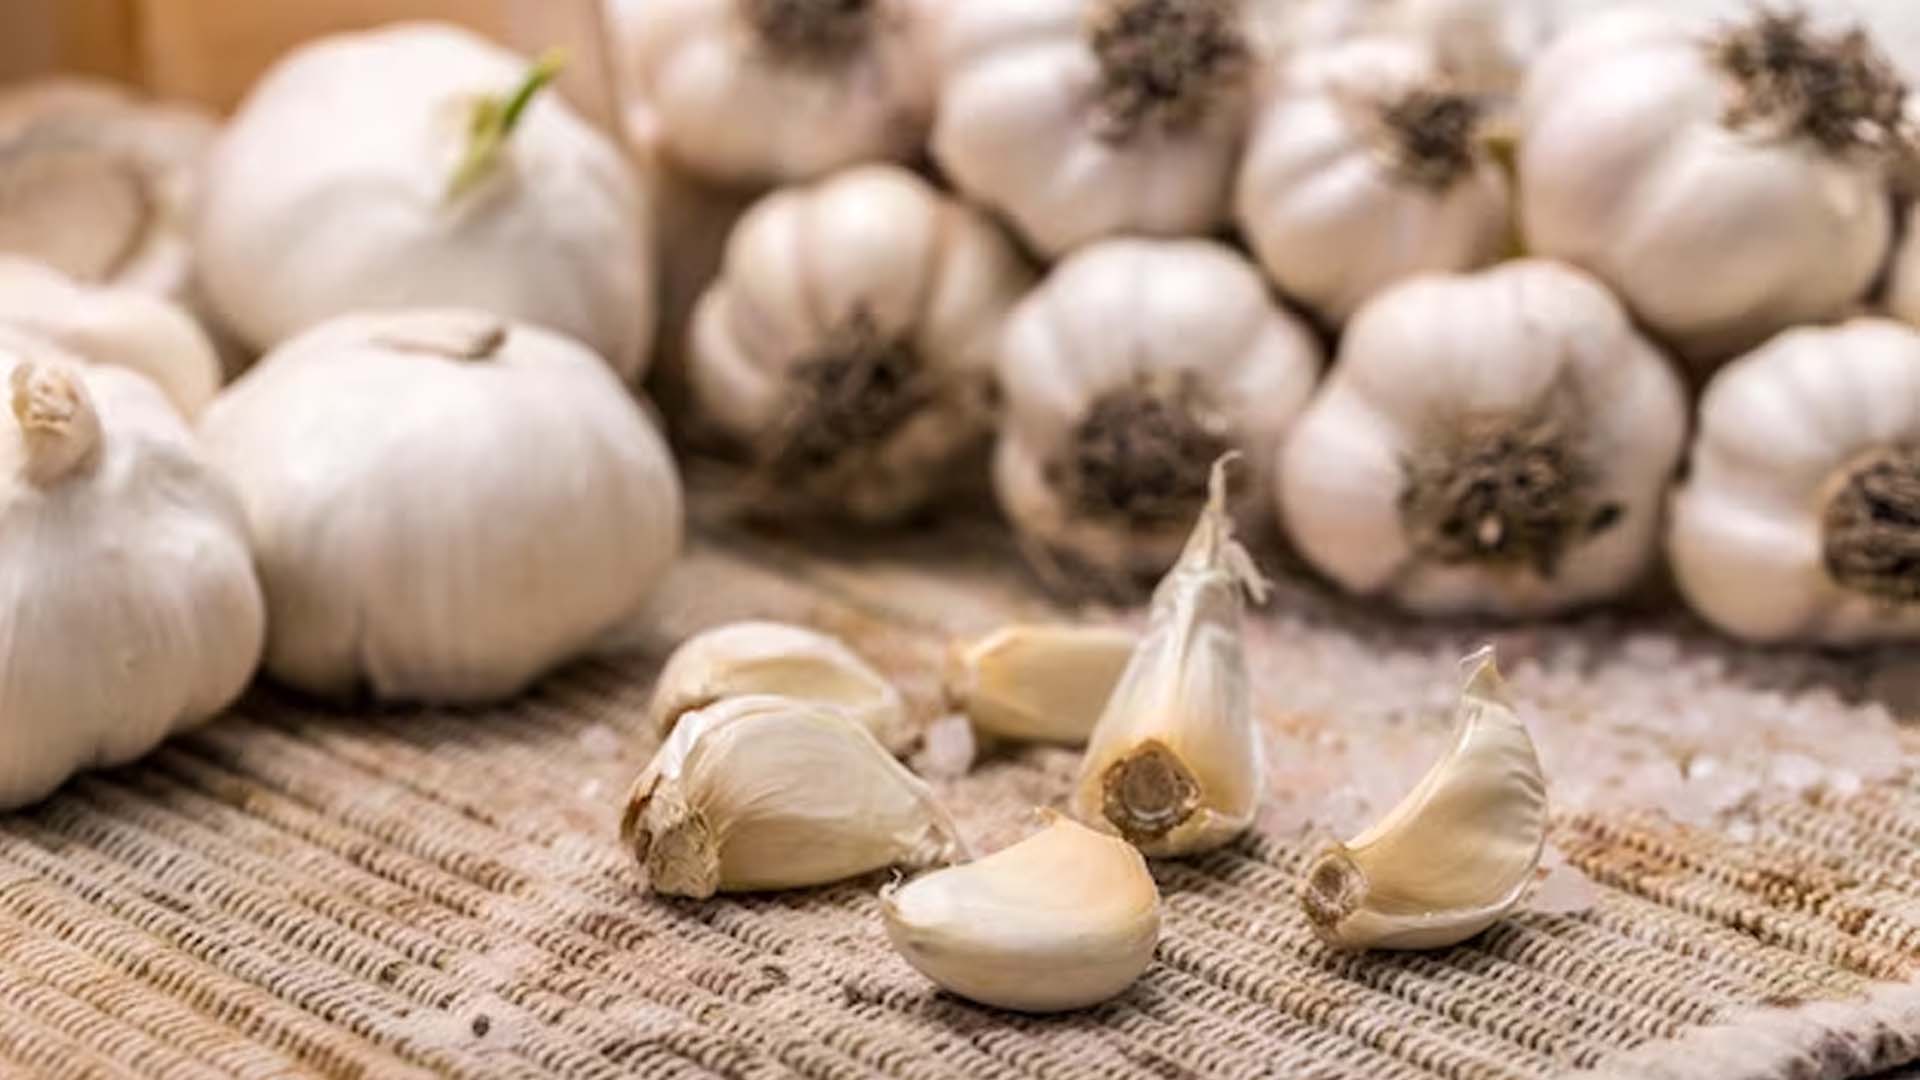 Garlic and garlic cloves